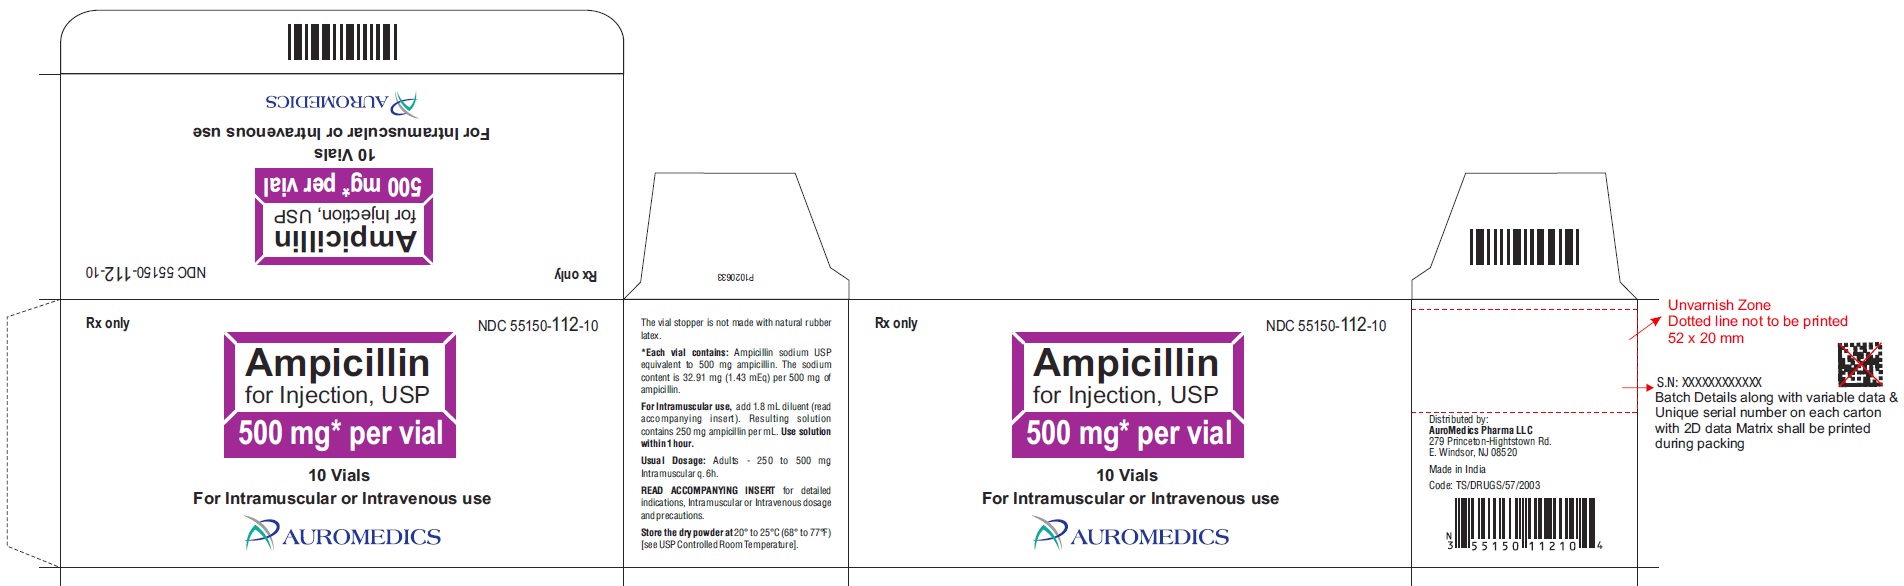 PACKAGE LABEL-PRINCIPAL DISPLAY PANEL - 500 mg Carton Label